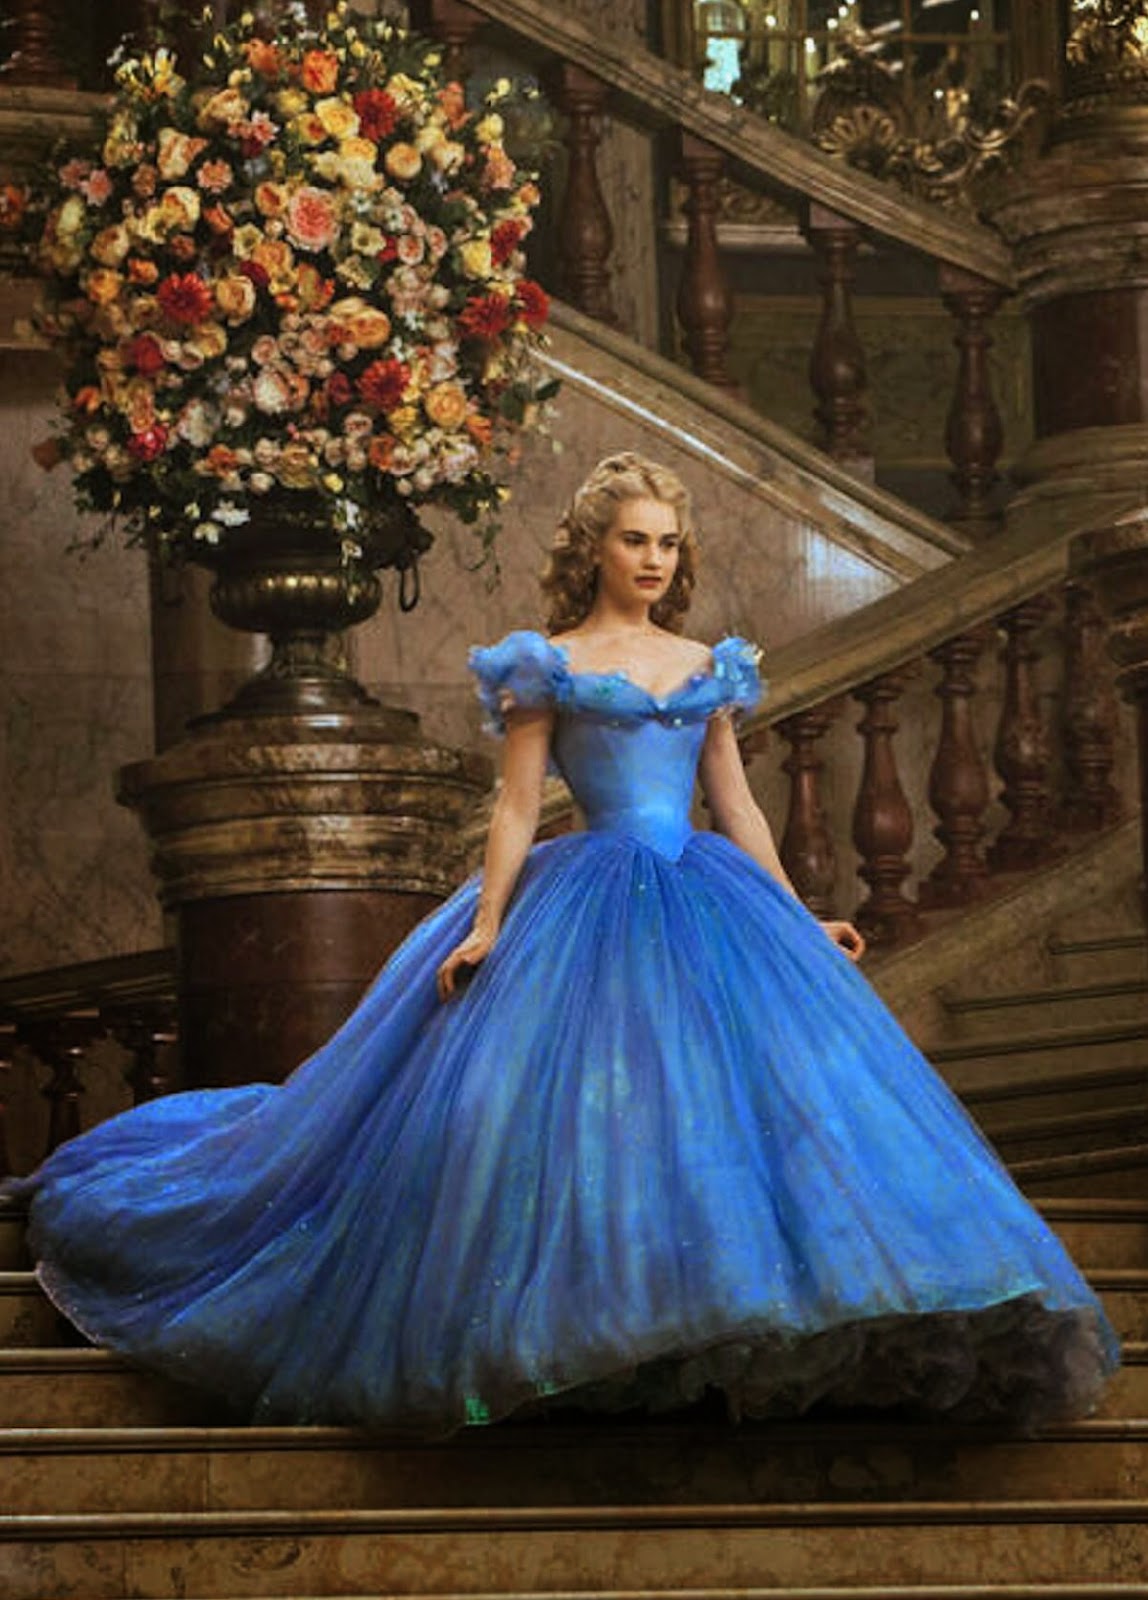 CINDERELLA 2015 MOVIE WALLPAPER HD Gambar Film Cinderella 2015